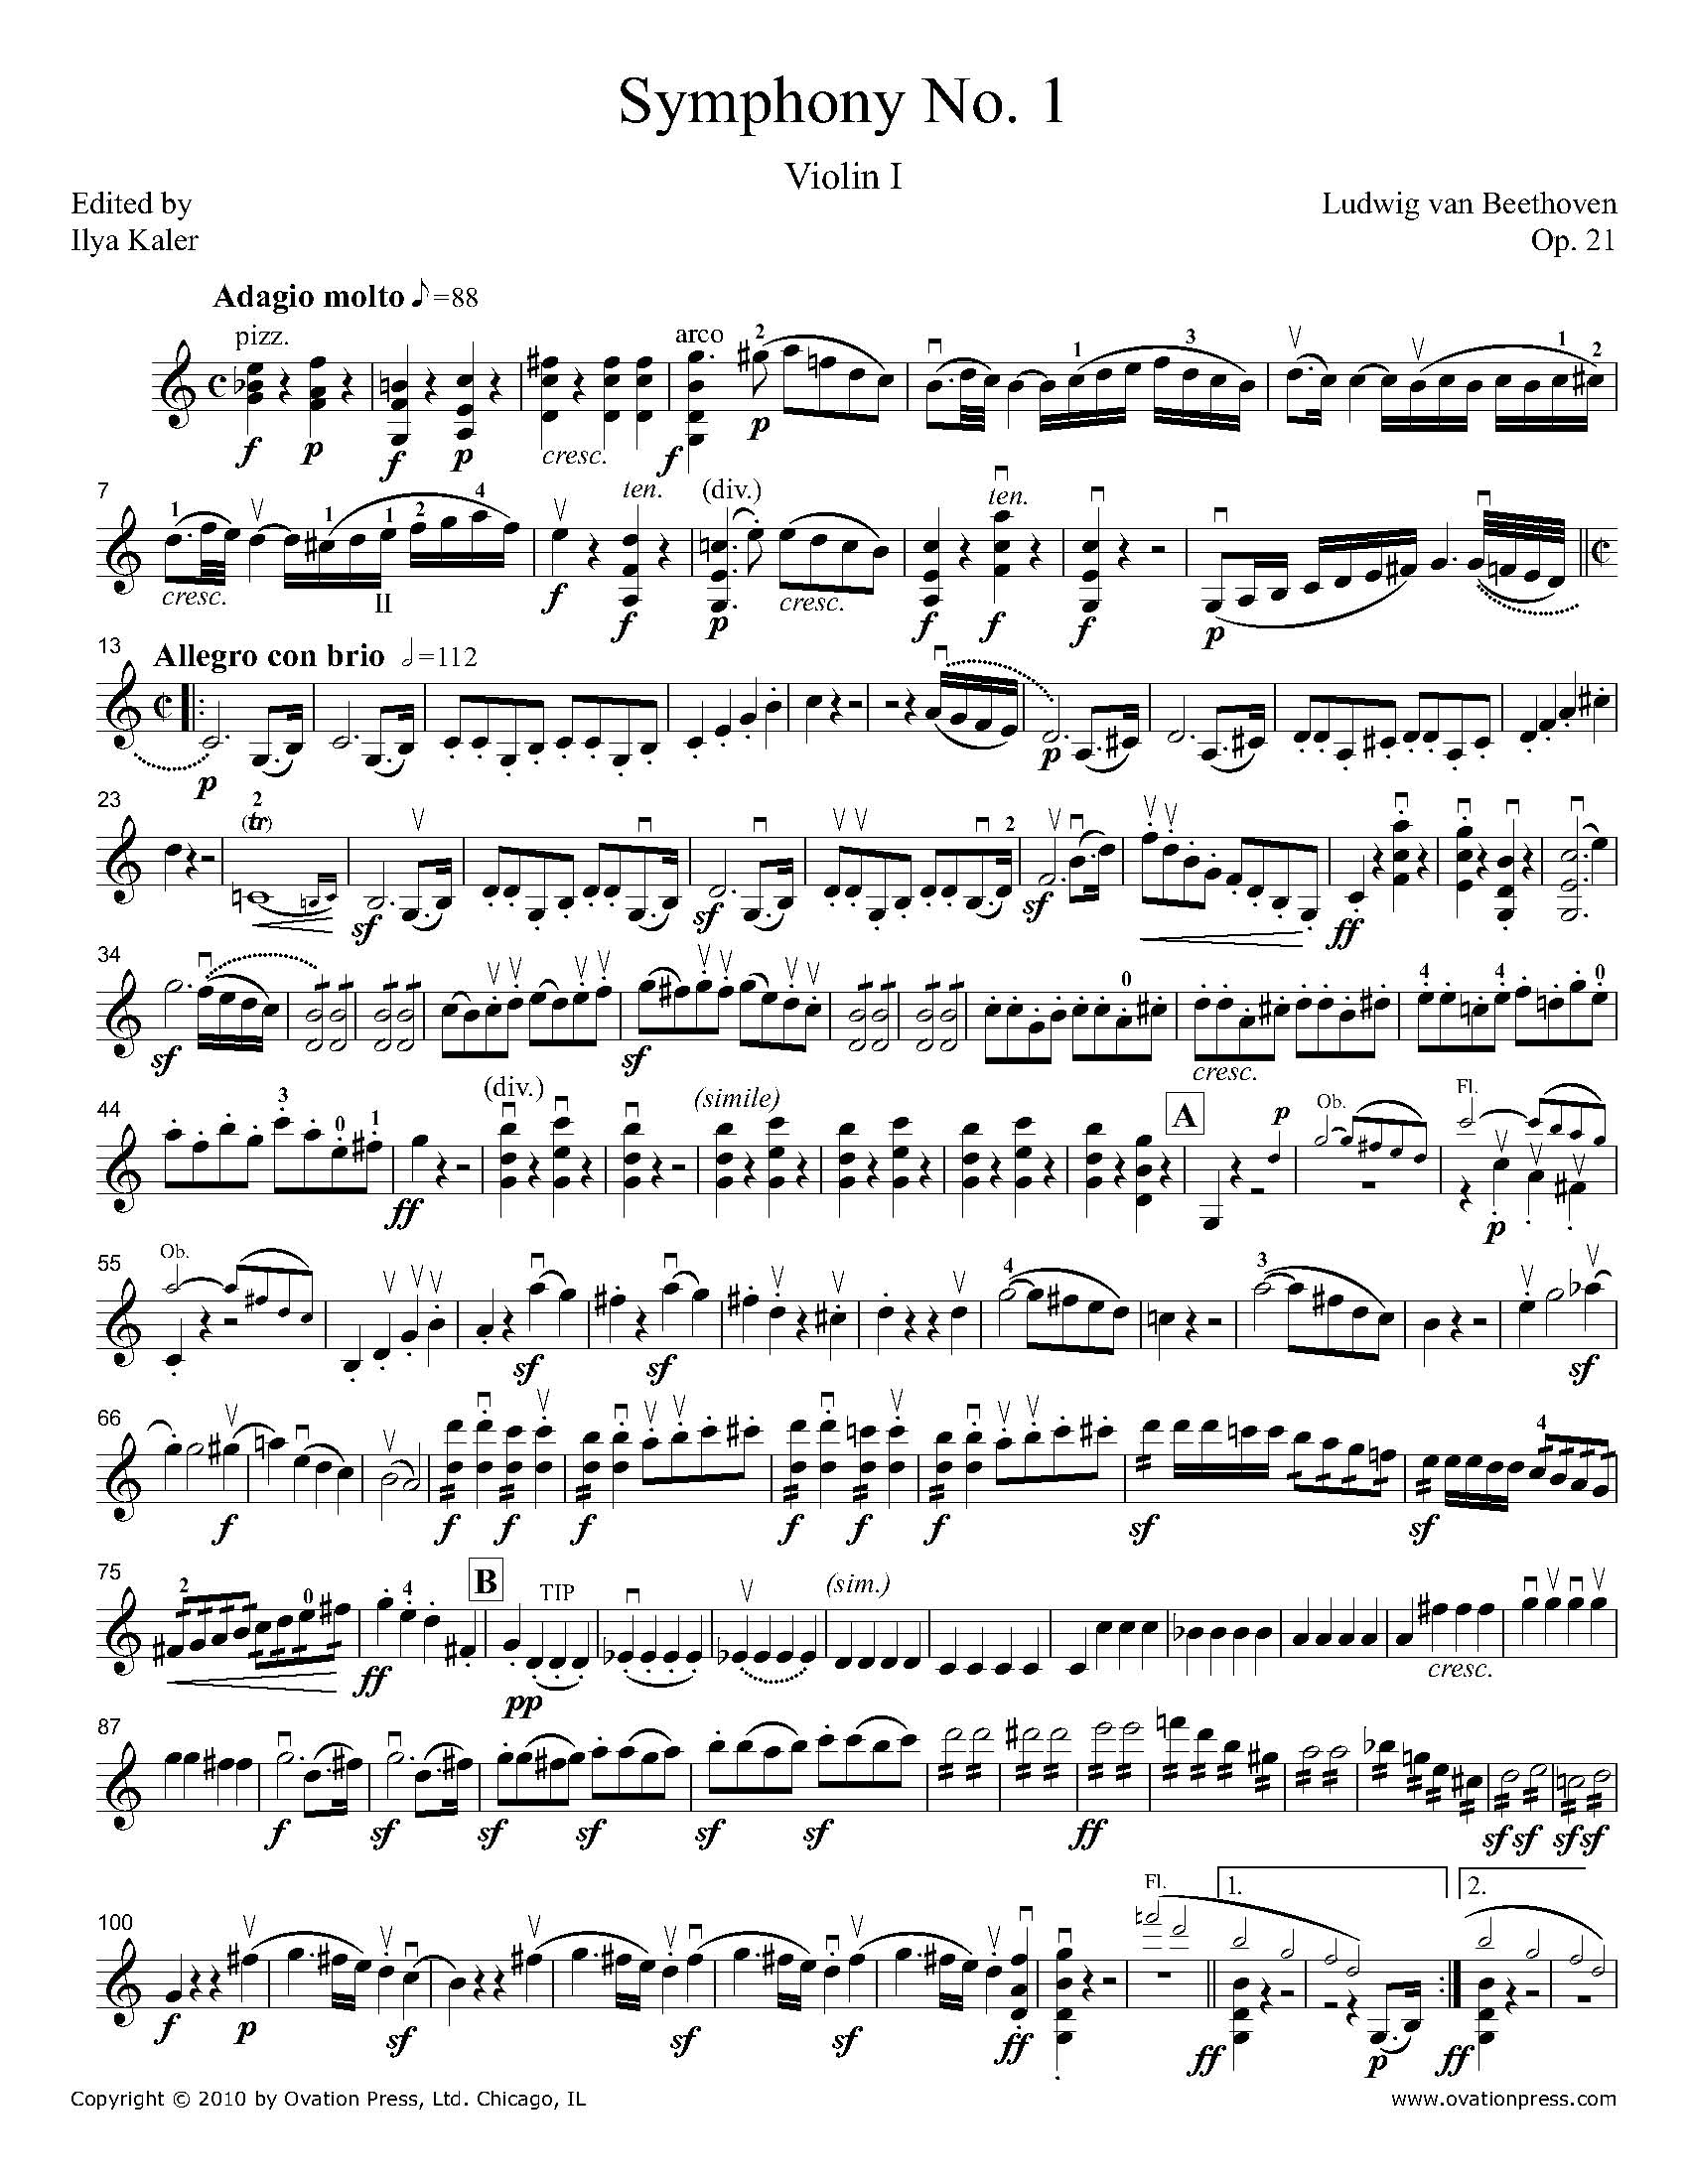 symphonie n 1 beethoven - symphonie nº 1 de beethoven